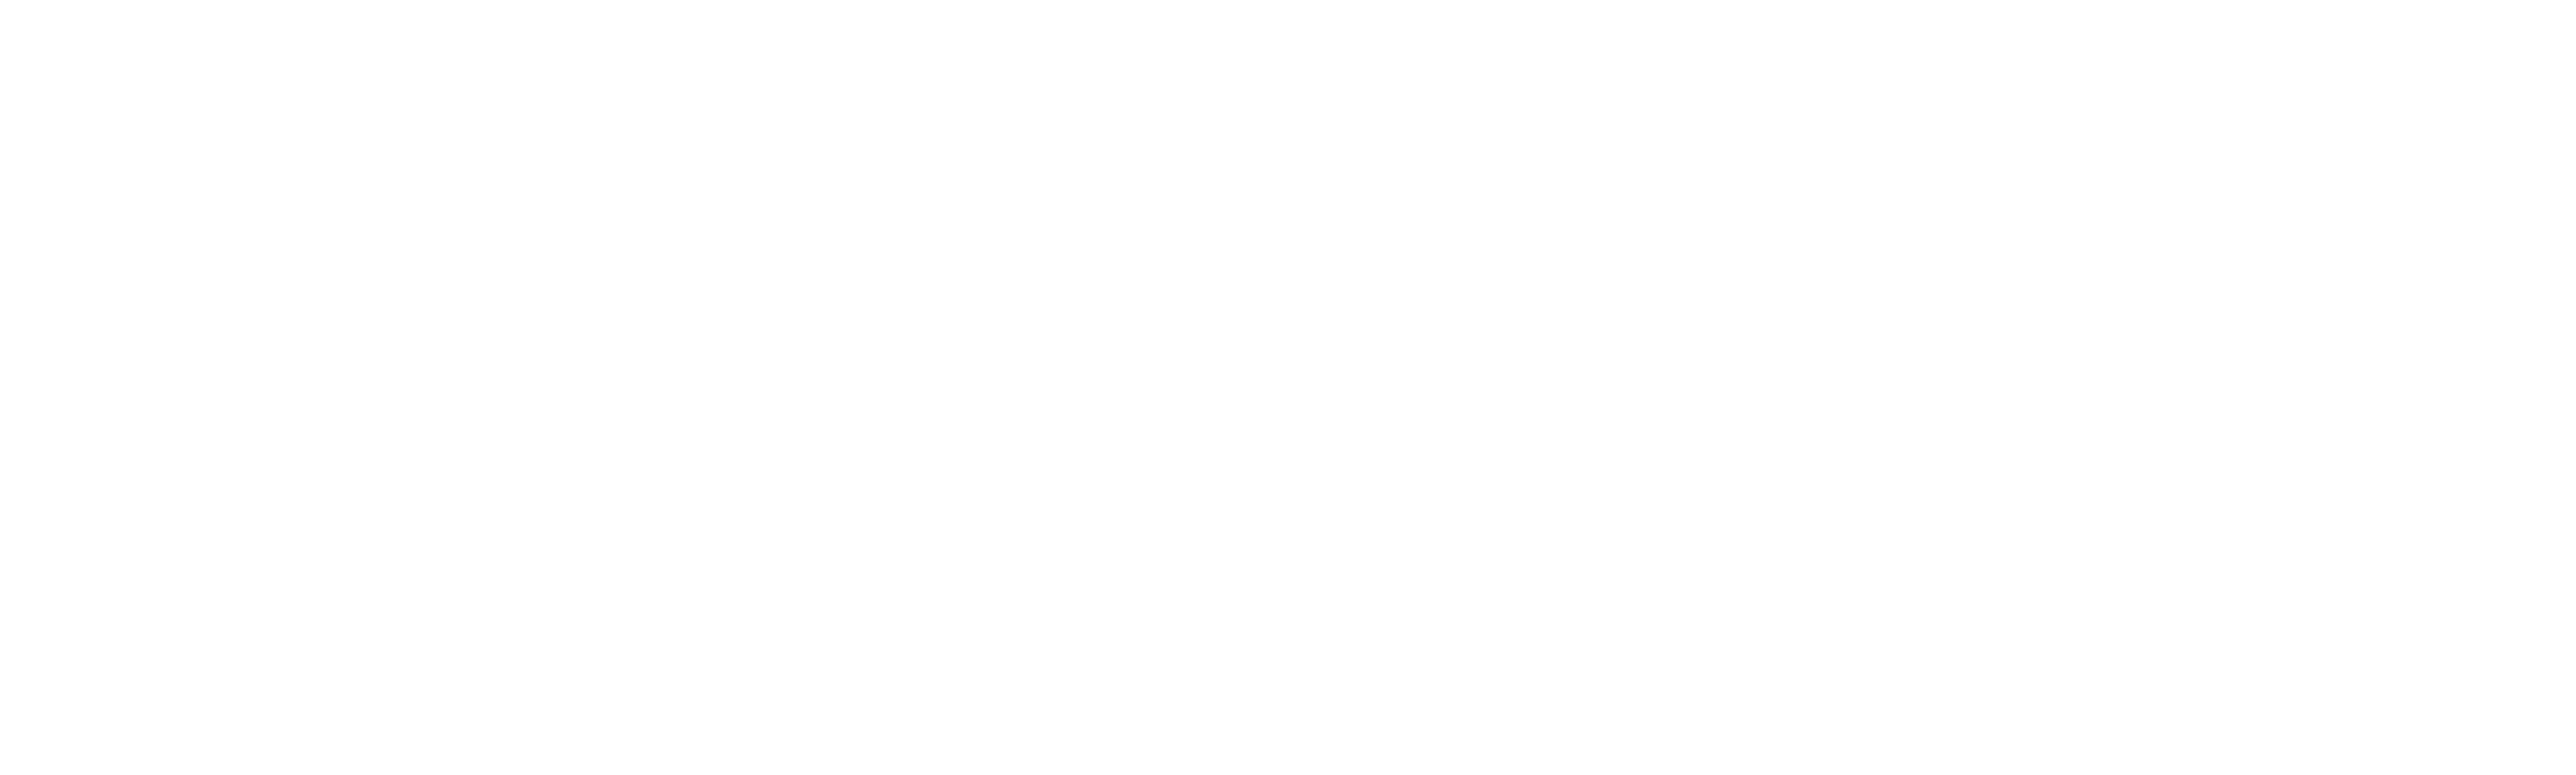 STEVEN UNIVERSE RAP - (Temporada 5) Season 5